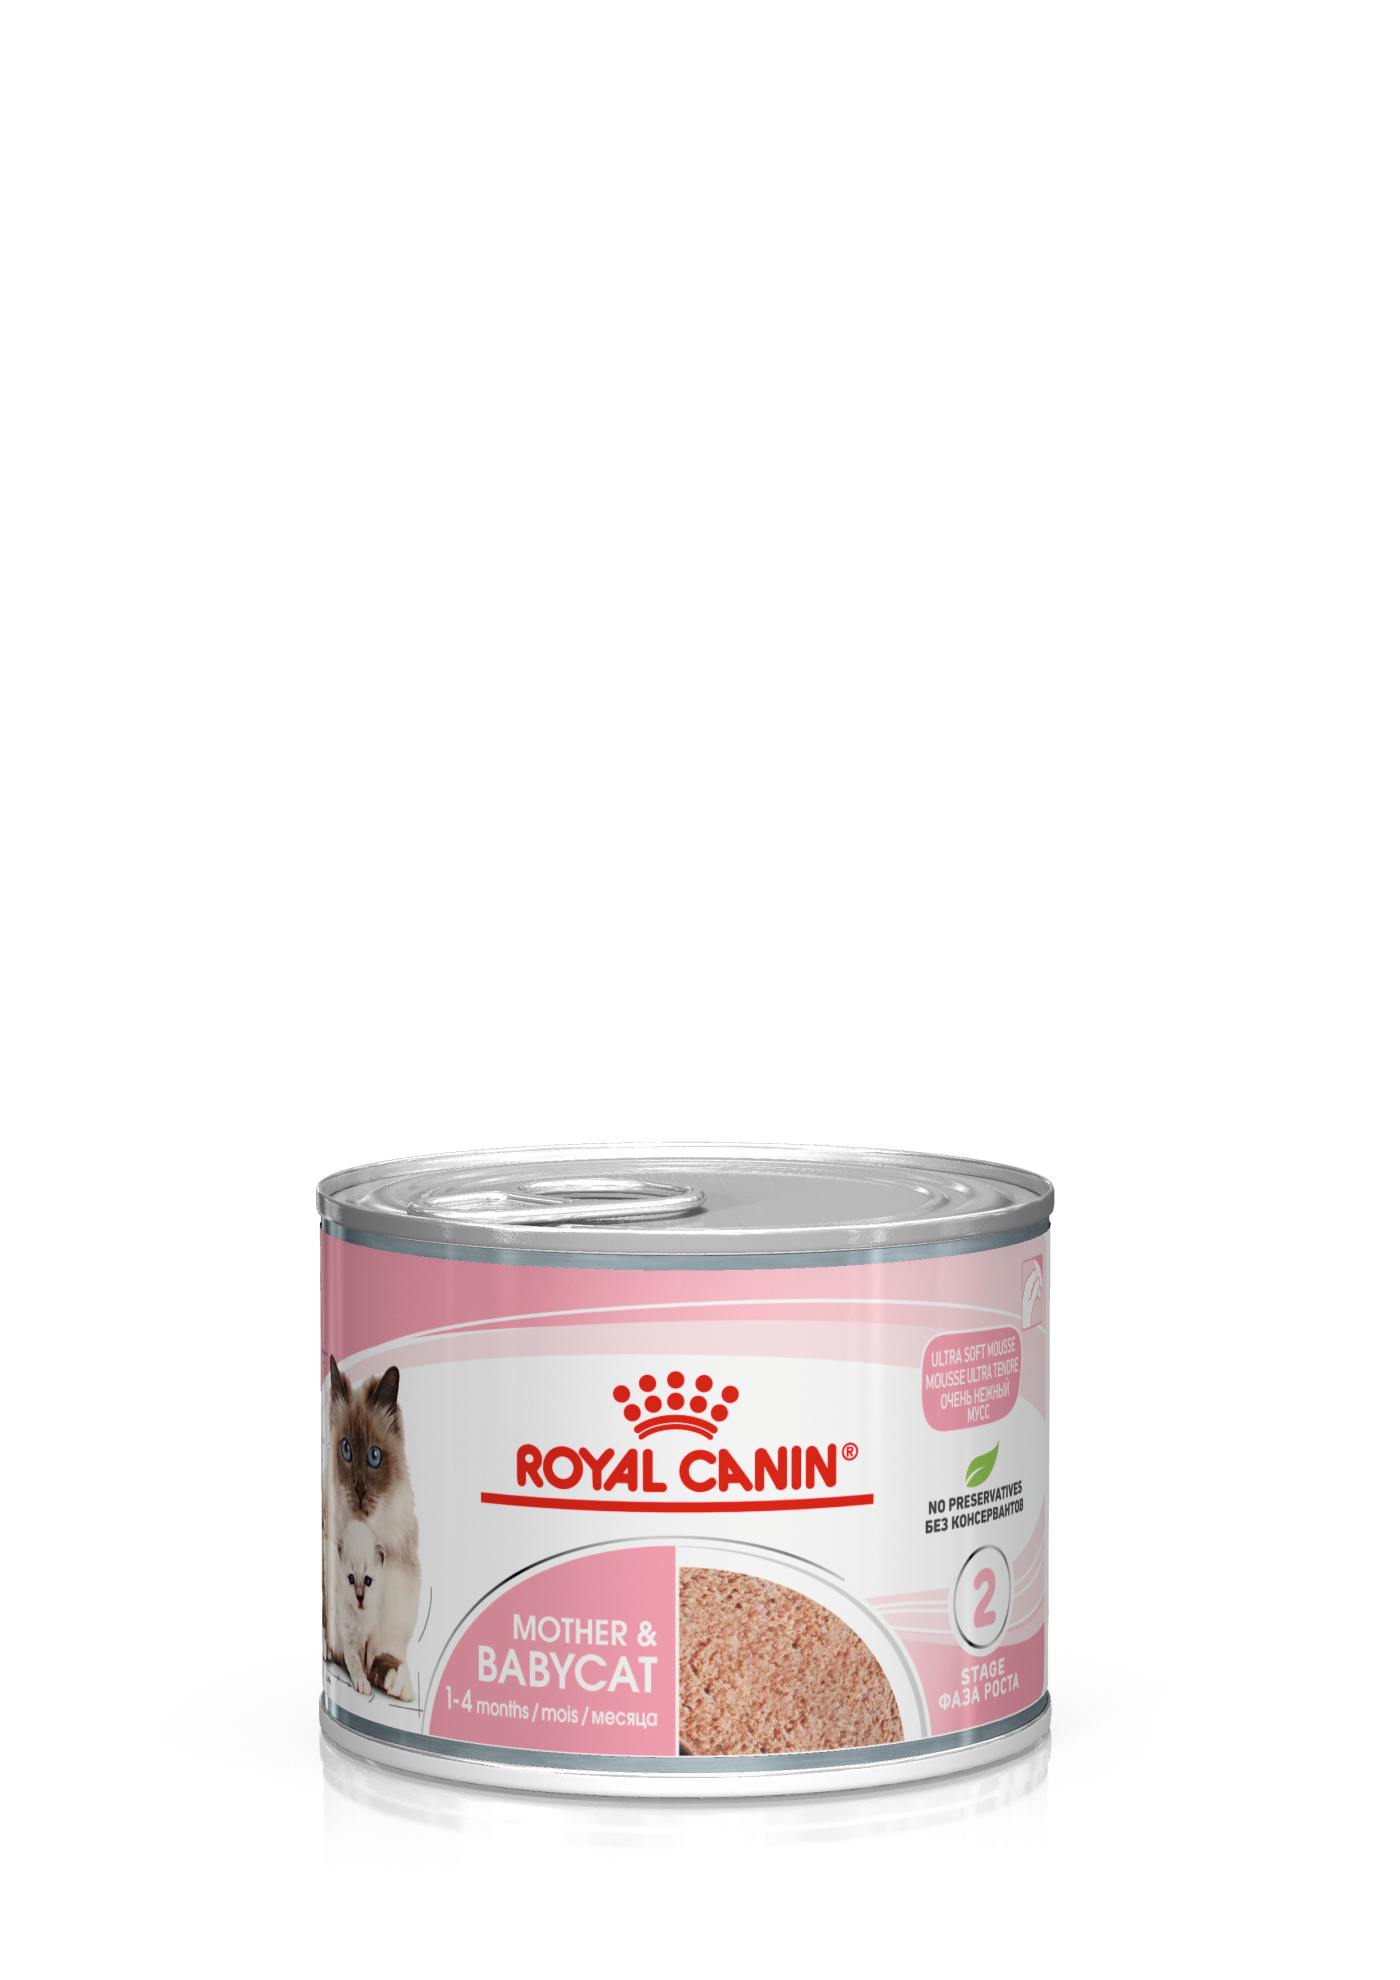 ROYAL CANIN® Feline Mother & Babycat Ultra soft mousse Wet Pet Food